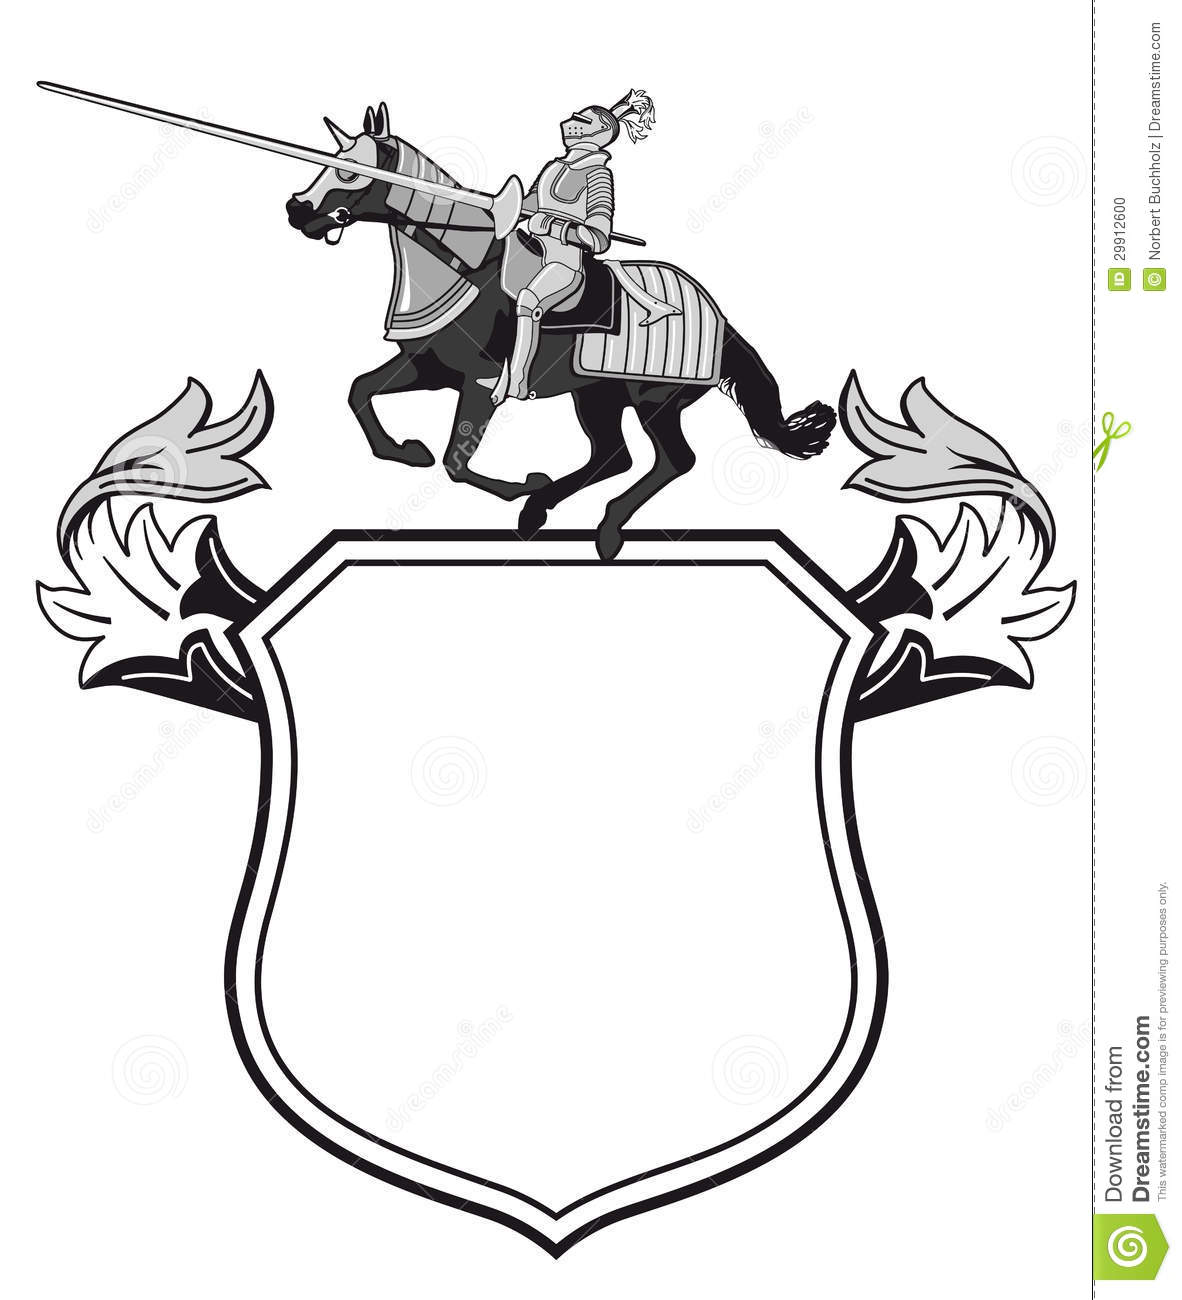 Heraldic knights shield.